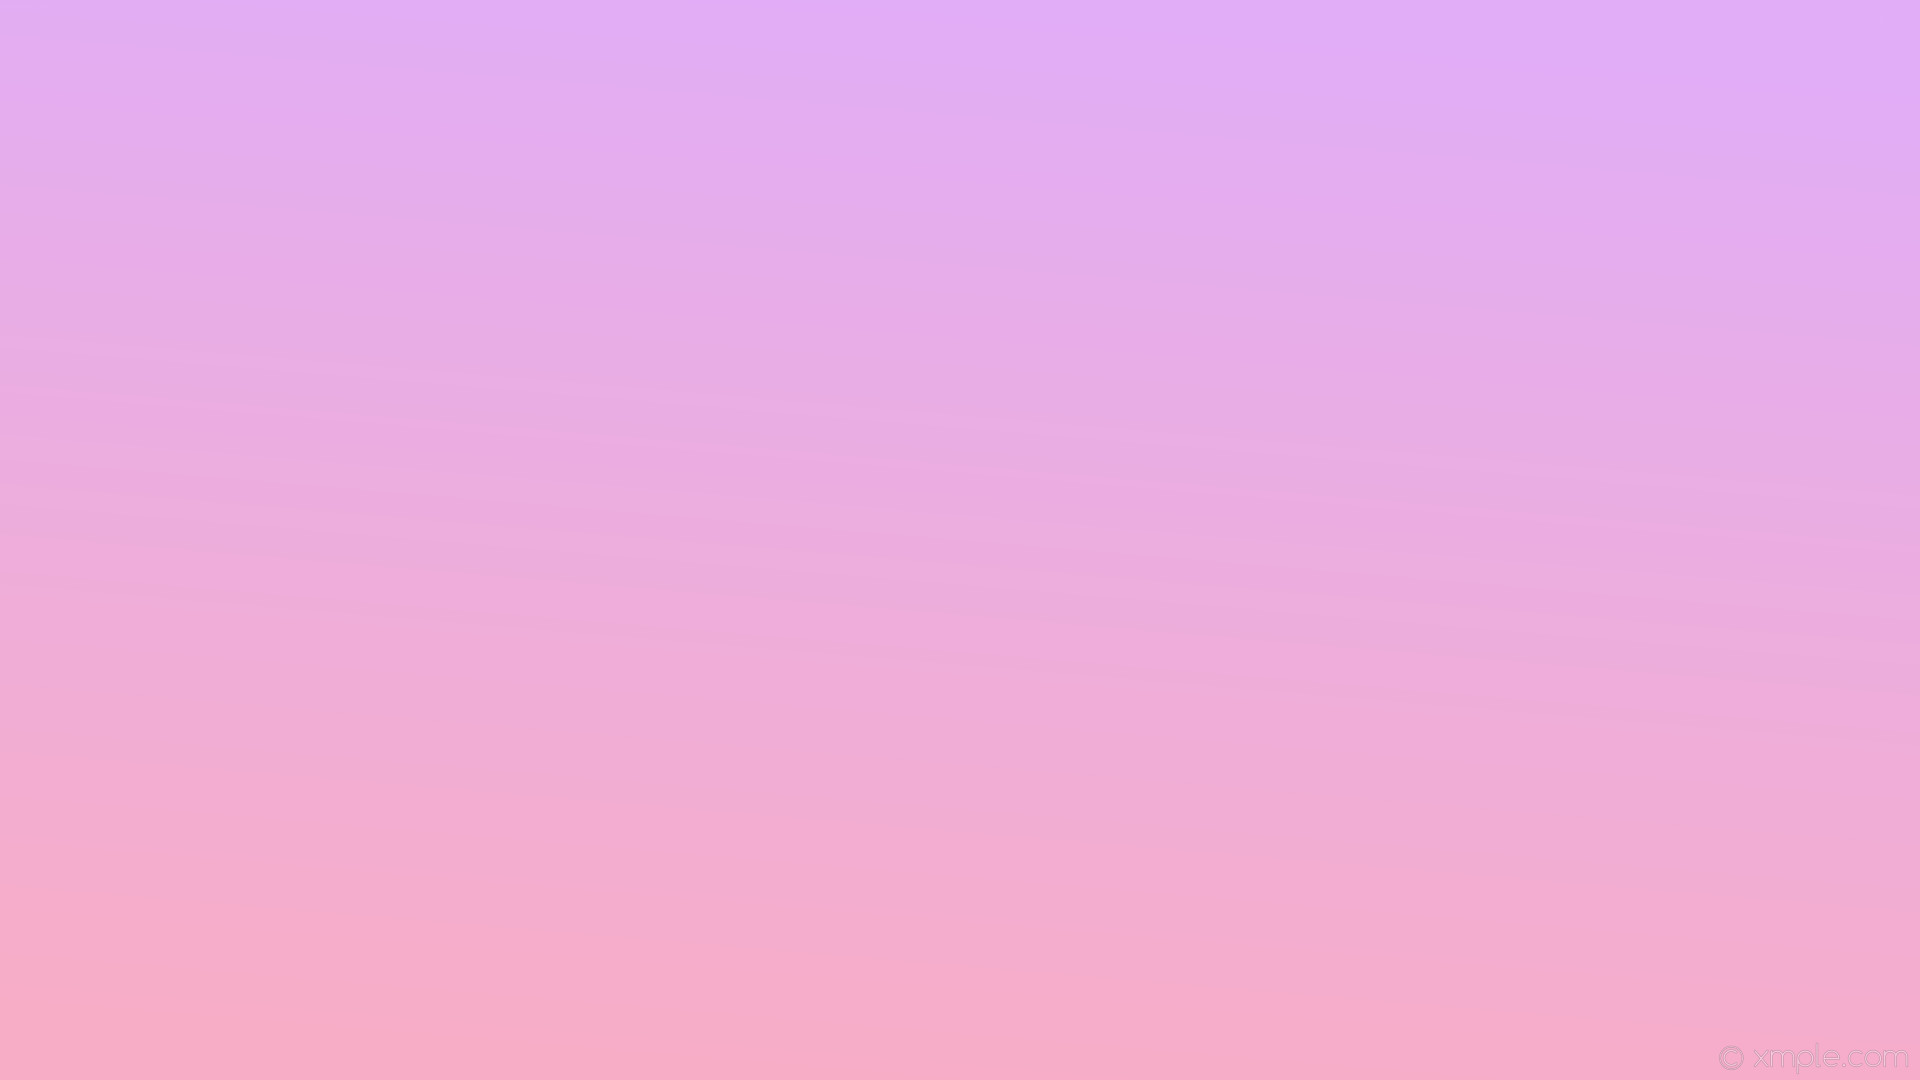 1920x1080 wallpaper pink gradient linear violet light pink light violet #f7adc6  #e1adf7 255Â°